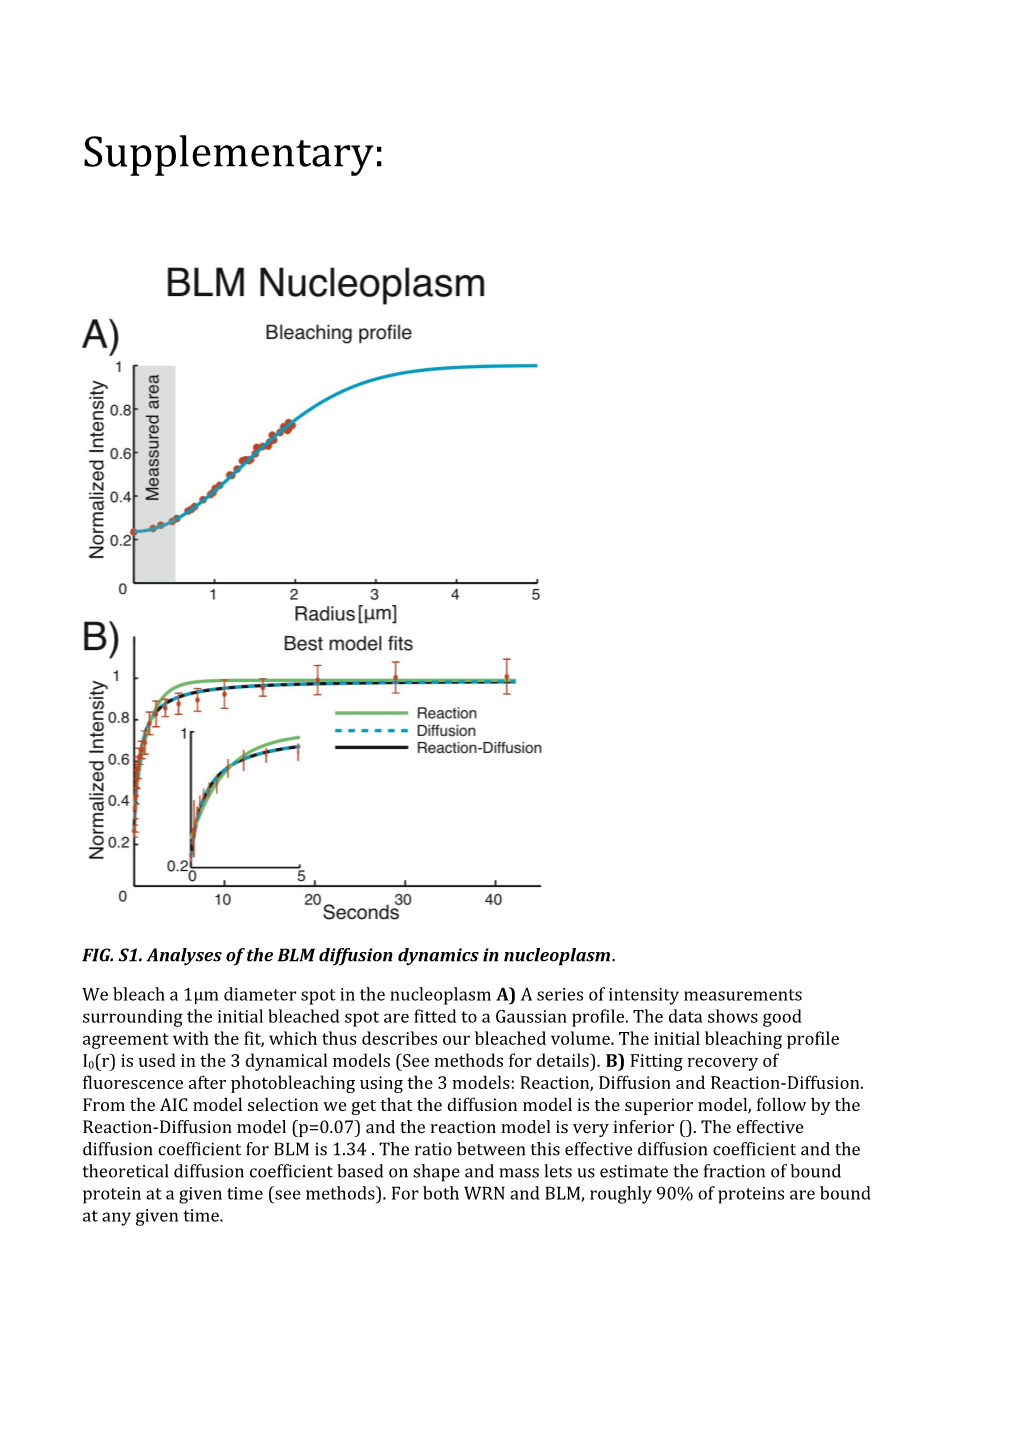 FIG. S1.Analysesofthe BLM Diffusiondynamicsinnucleoplasm